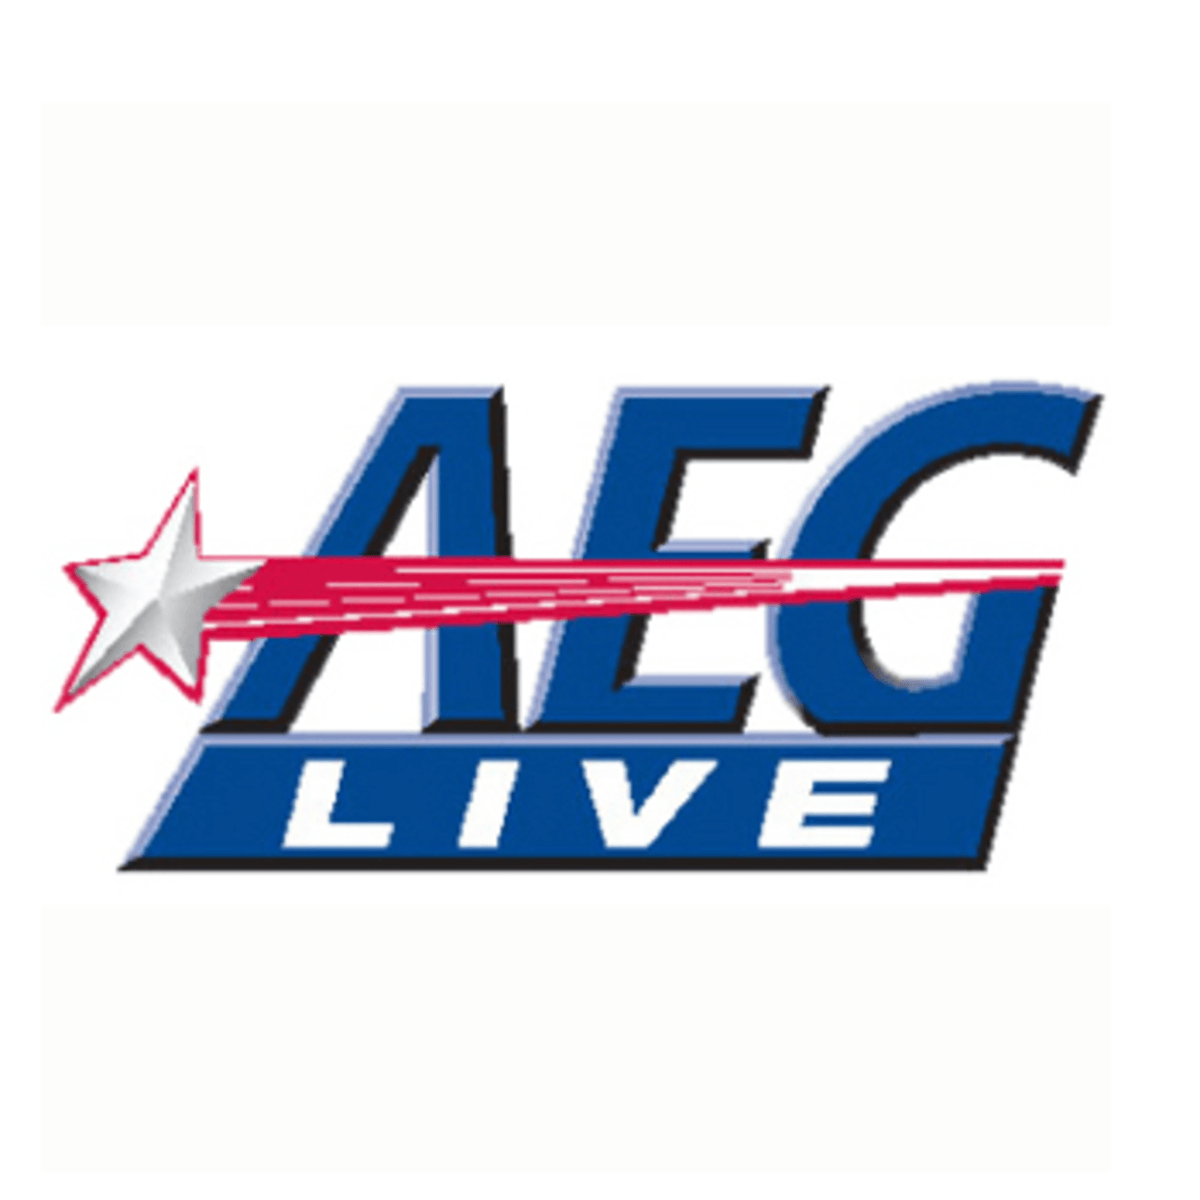 Anschutz Logo - AEG Live to be sold by Anschutz Company - Audio Media International